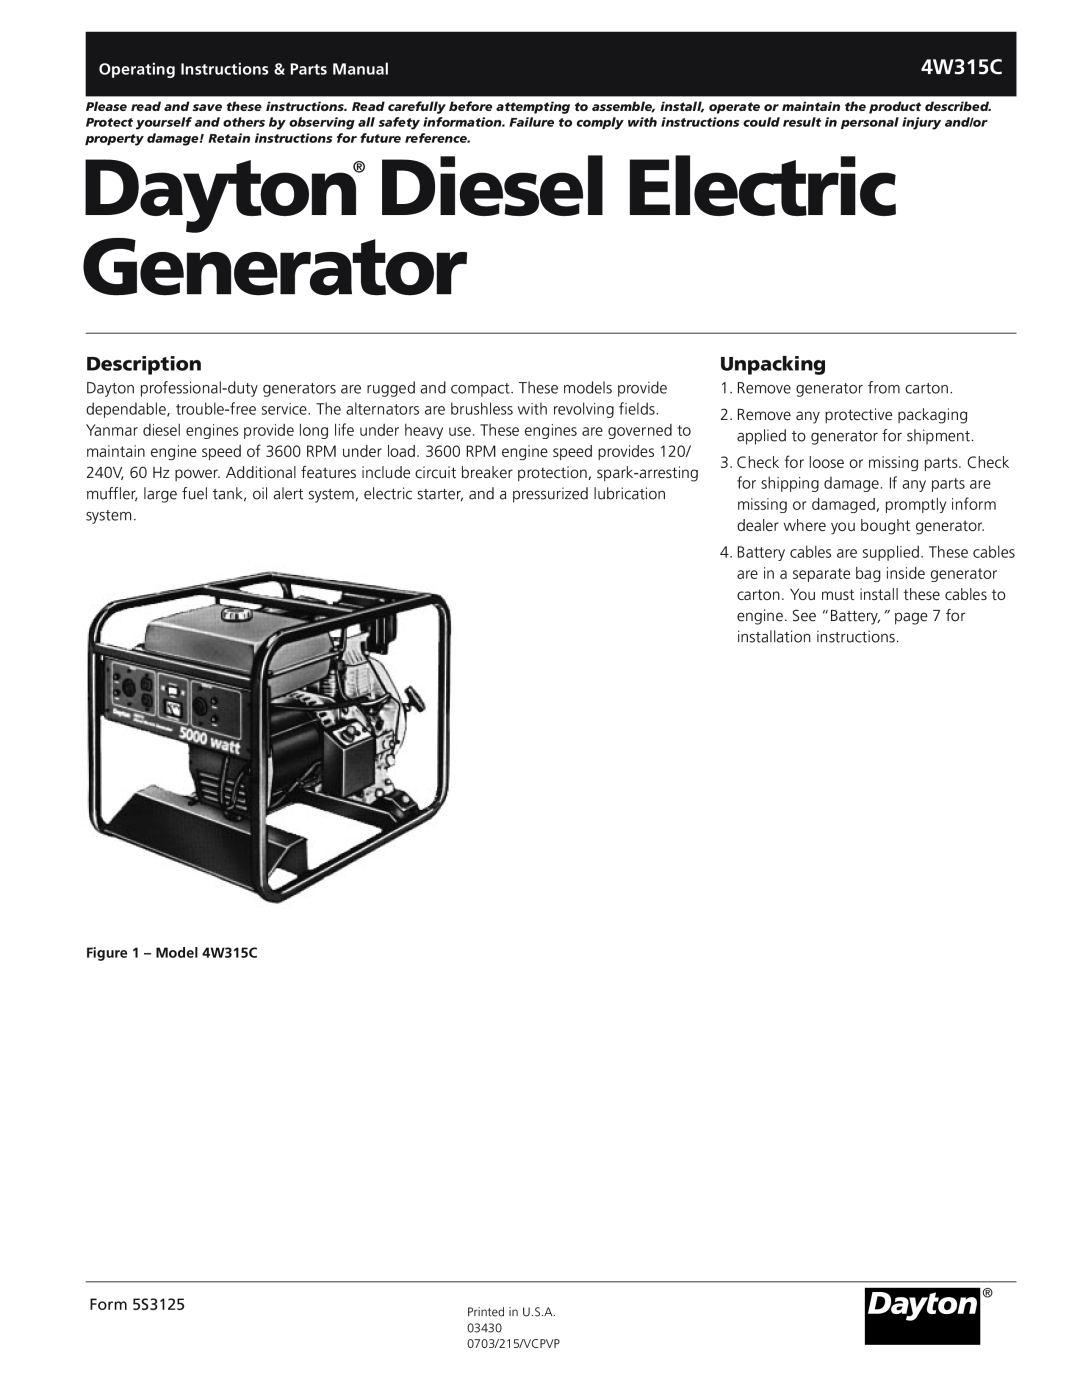 VDO Dayton 4W315C operating instructions Description, Unpacking, Dayton Diesel Electric Generator 